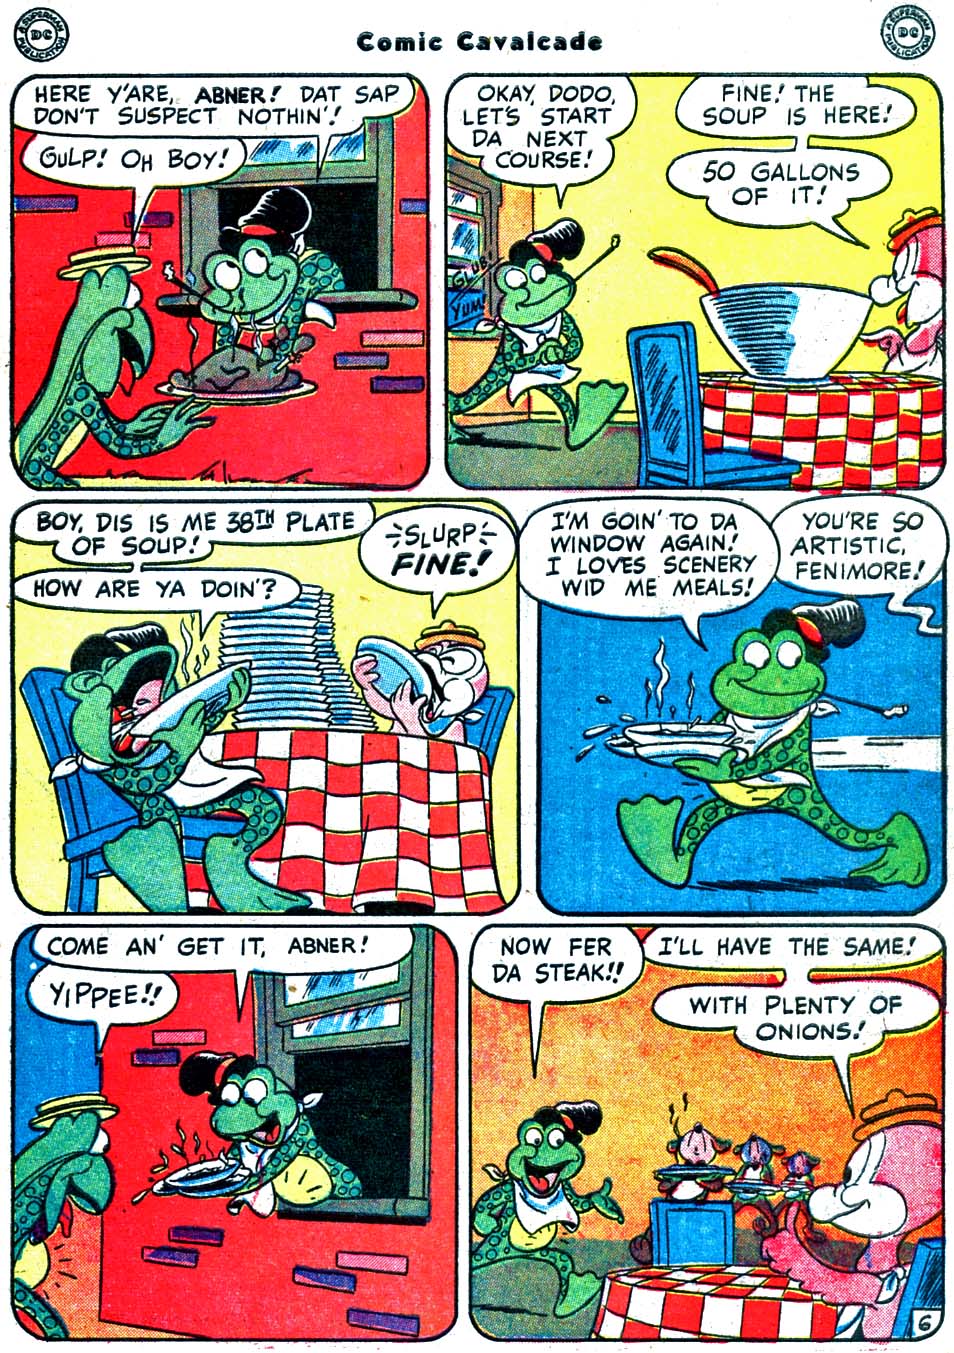 Comic Cavalcade issue 32 - Page 71